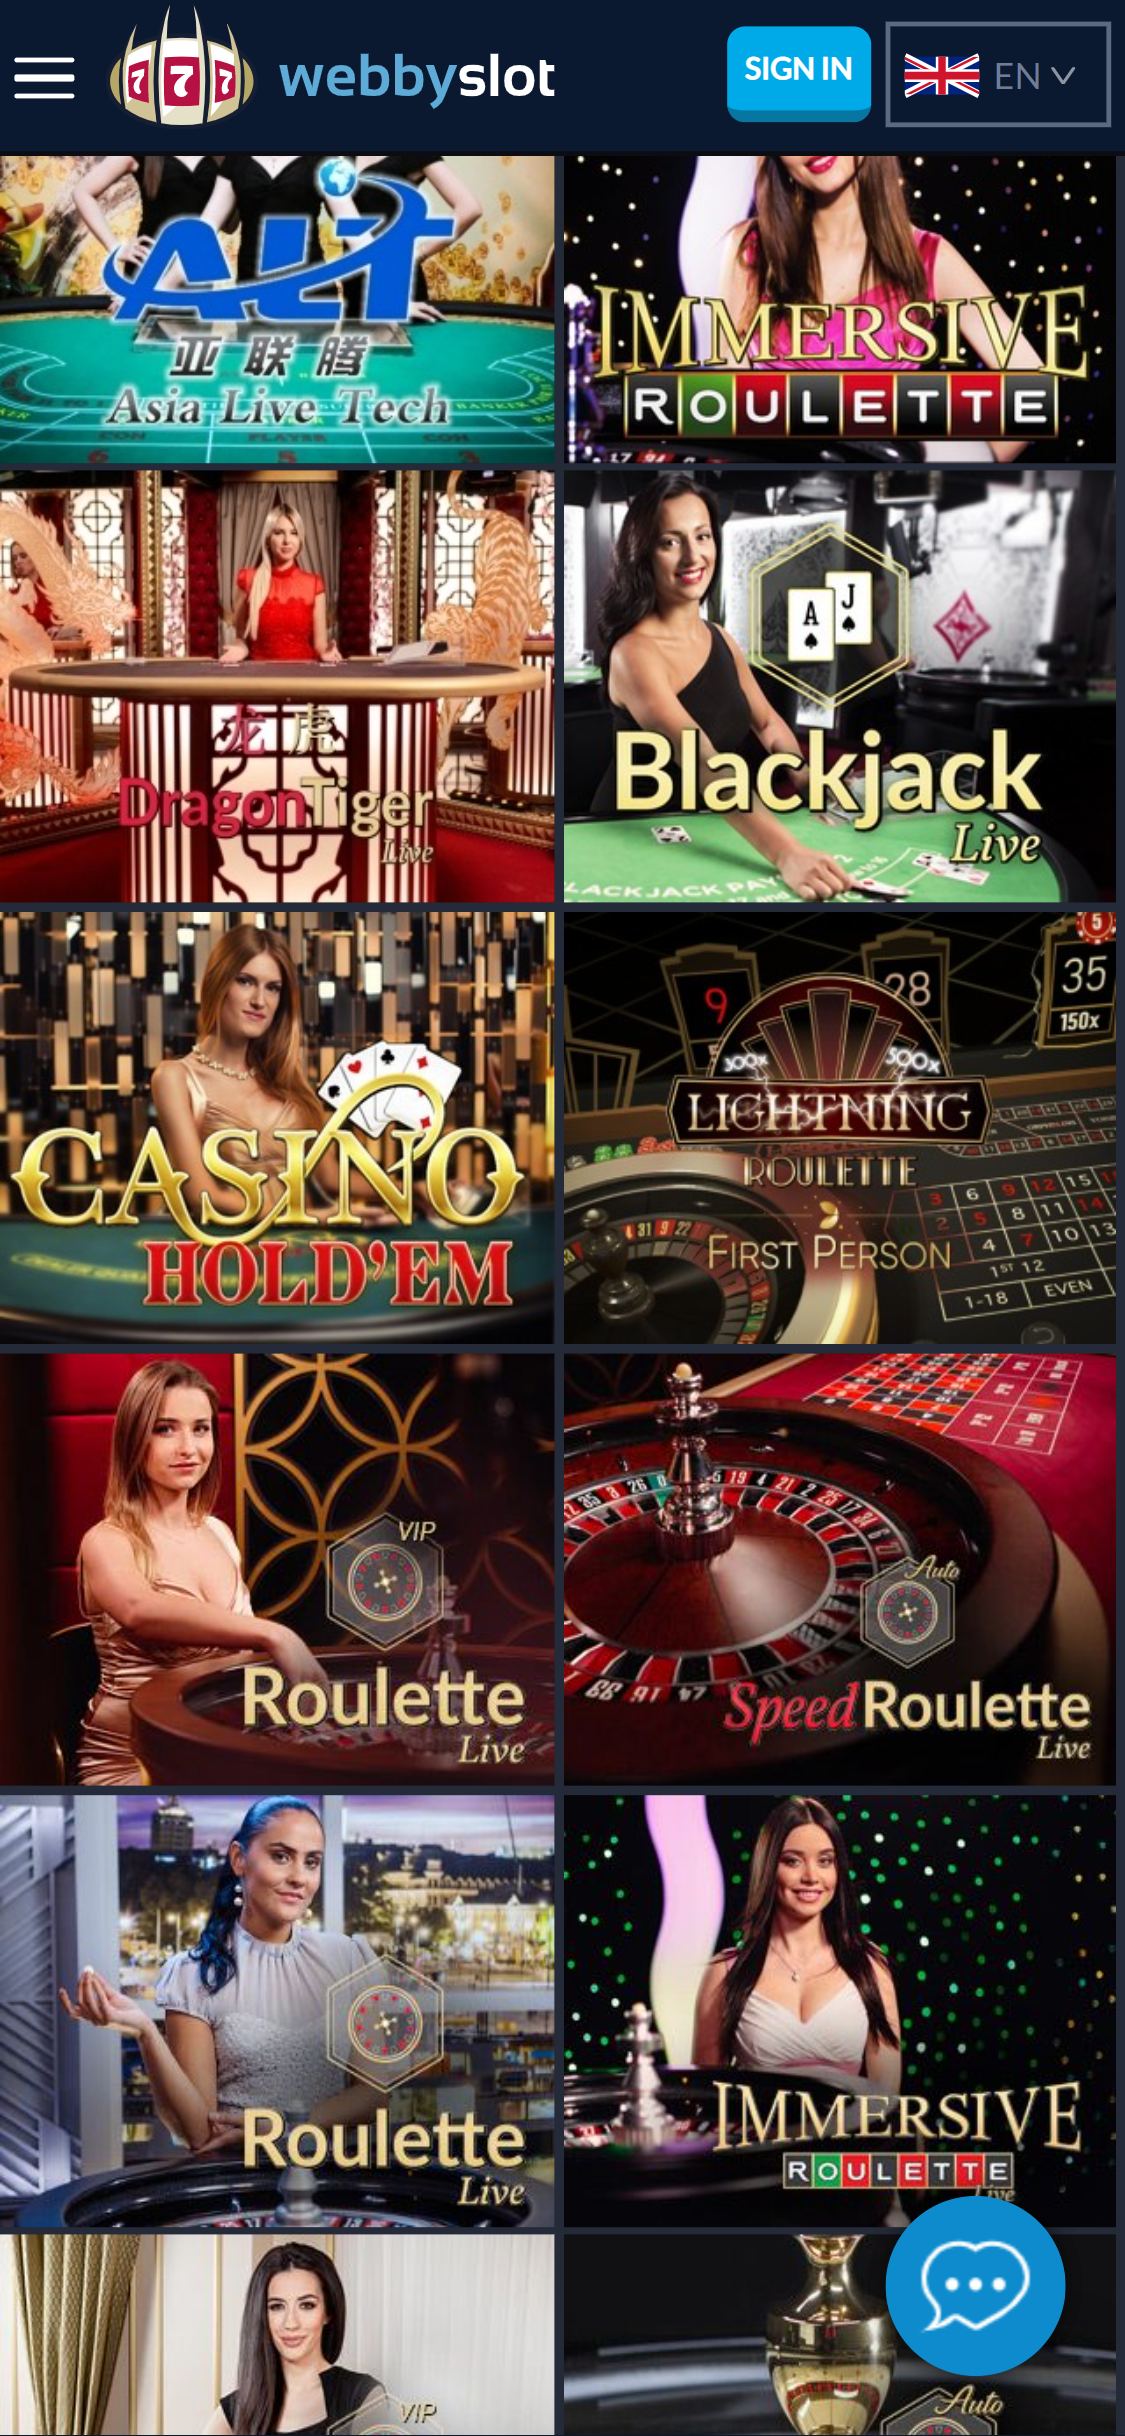 WebbySlot Casino Mobile Live Dealer Games Review